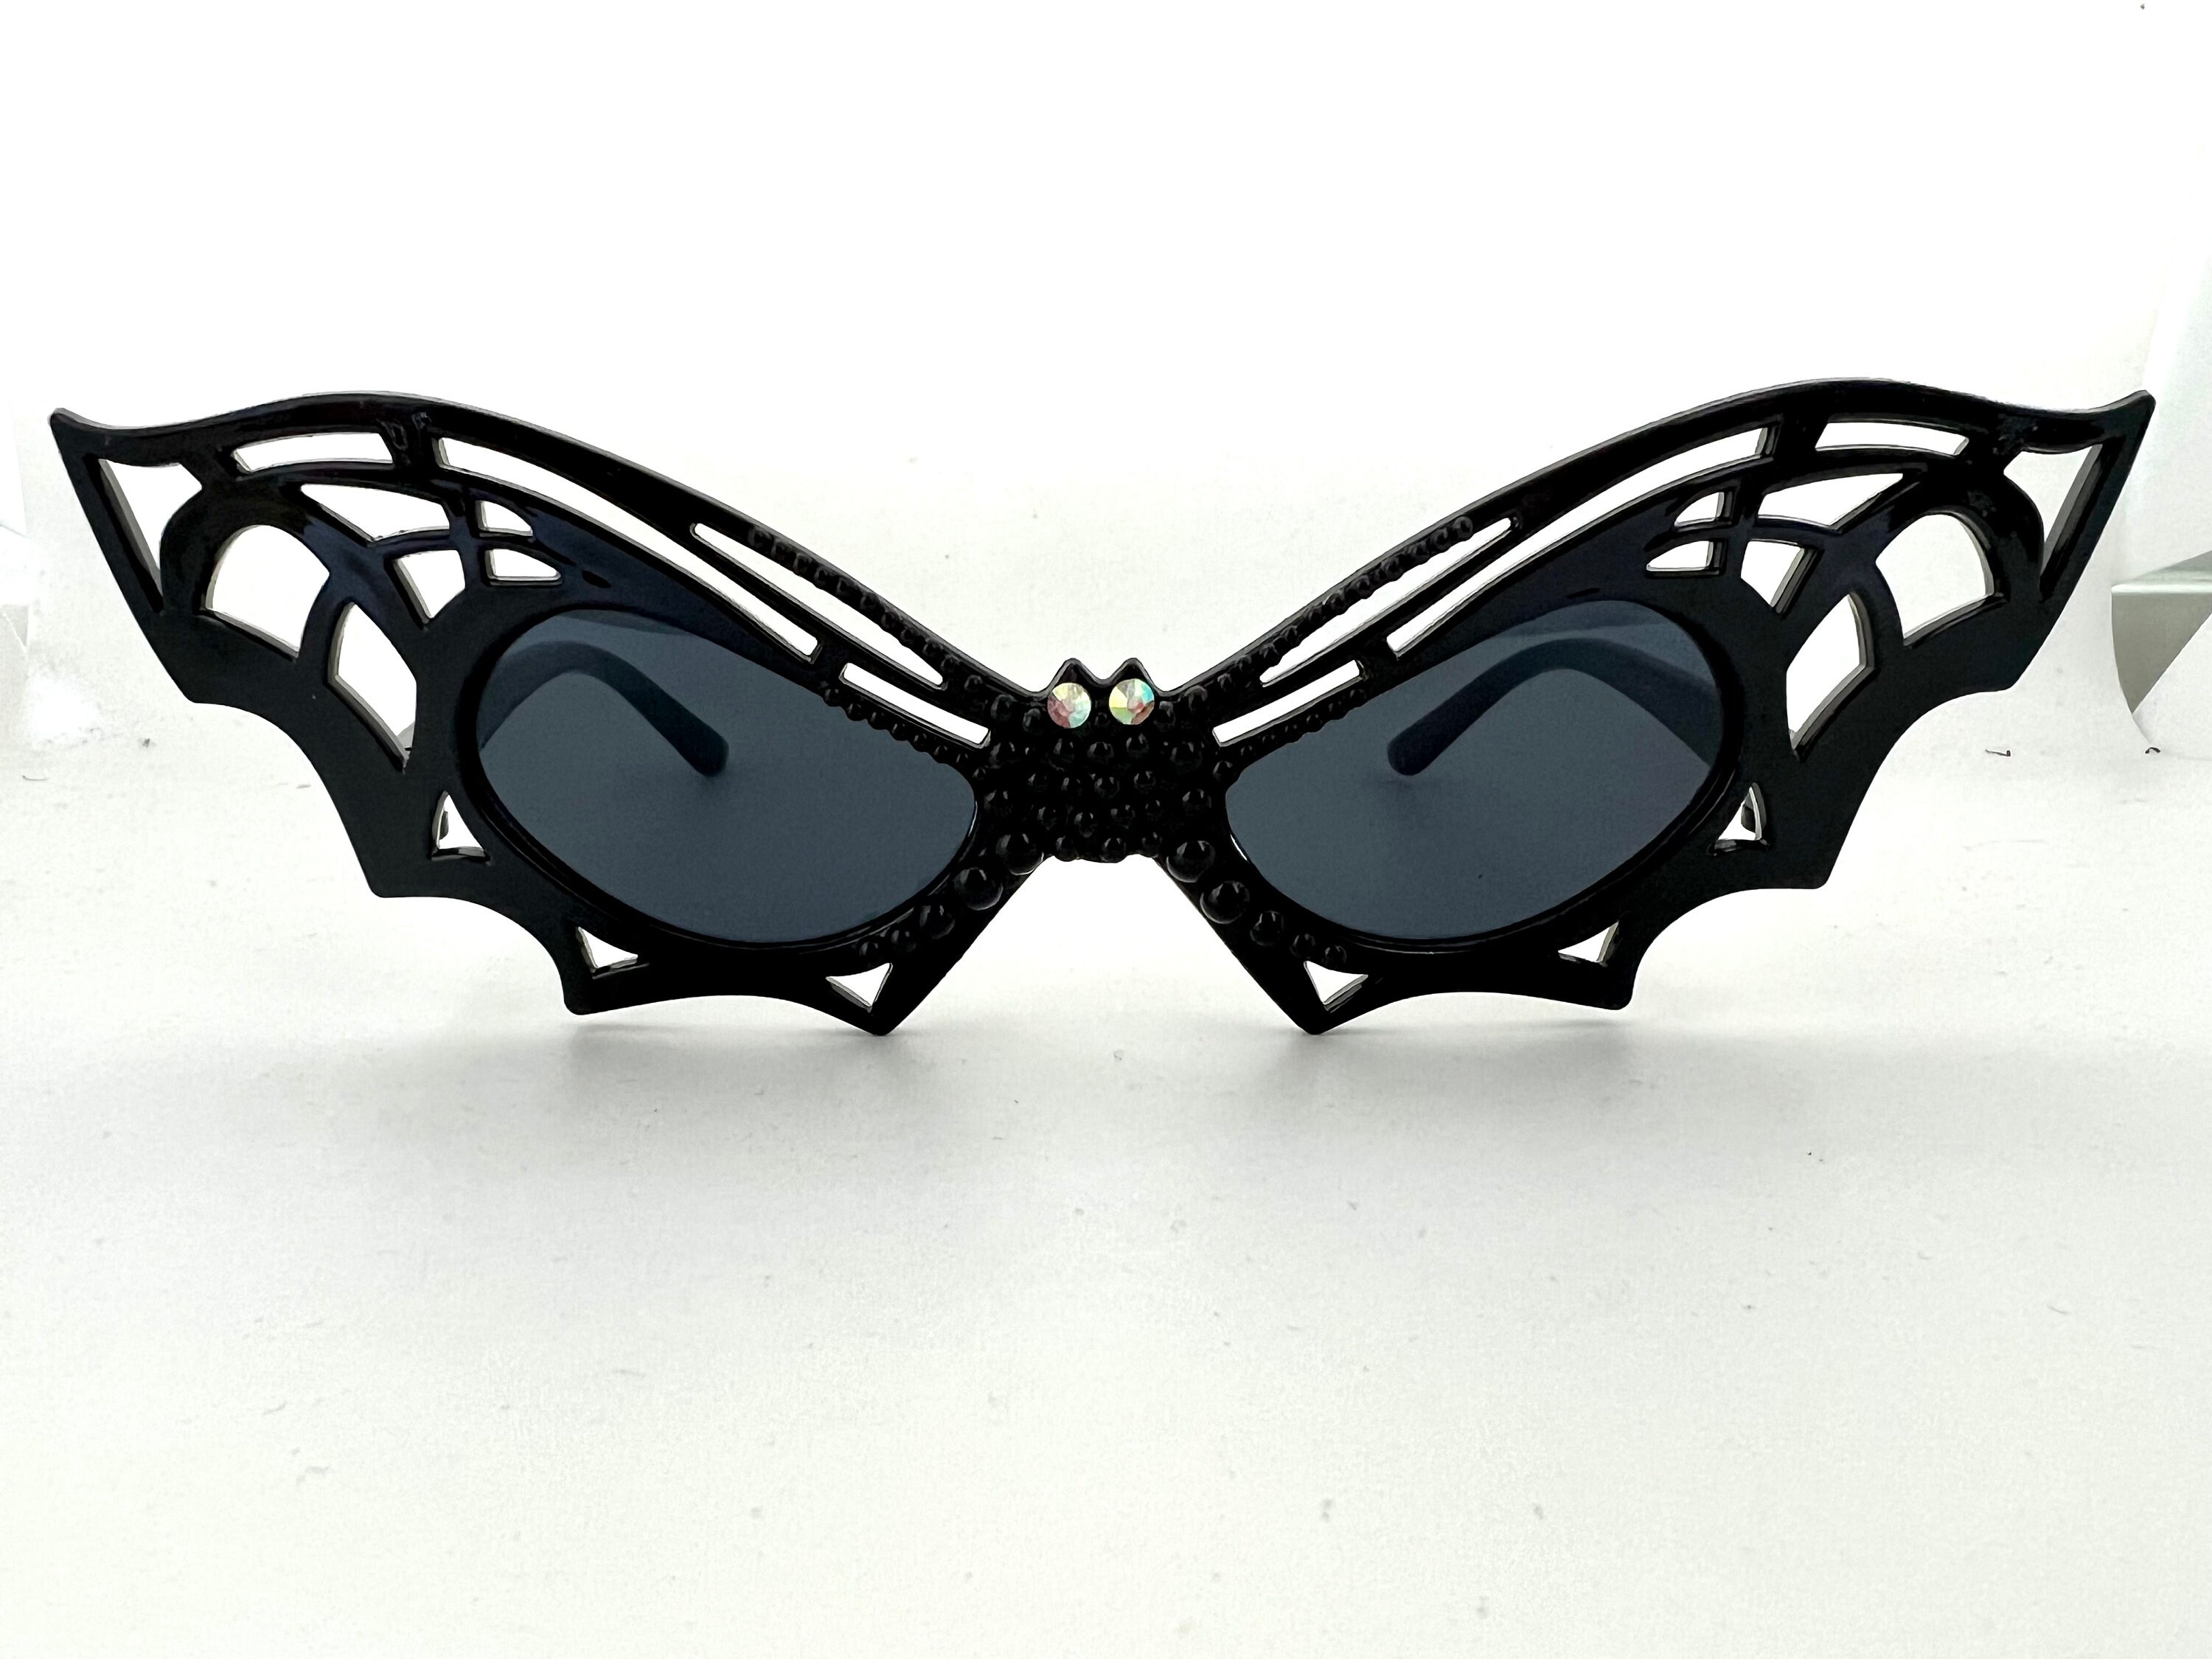 Guqqeuc Bat Eyeglass Chain Sunglasses Strap for Women Men Black Bat Eyewear  Glasses Chains for Halloween Cosplay Costume Accessories